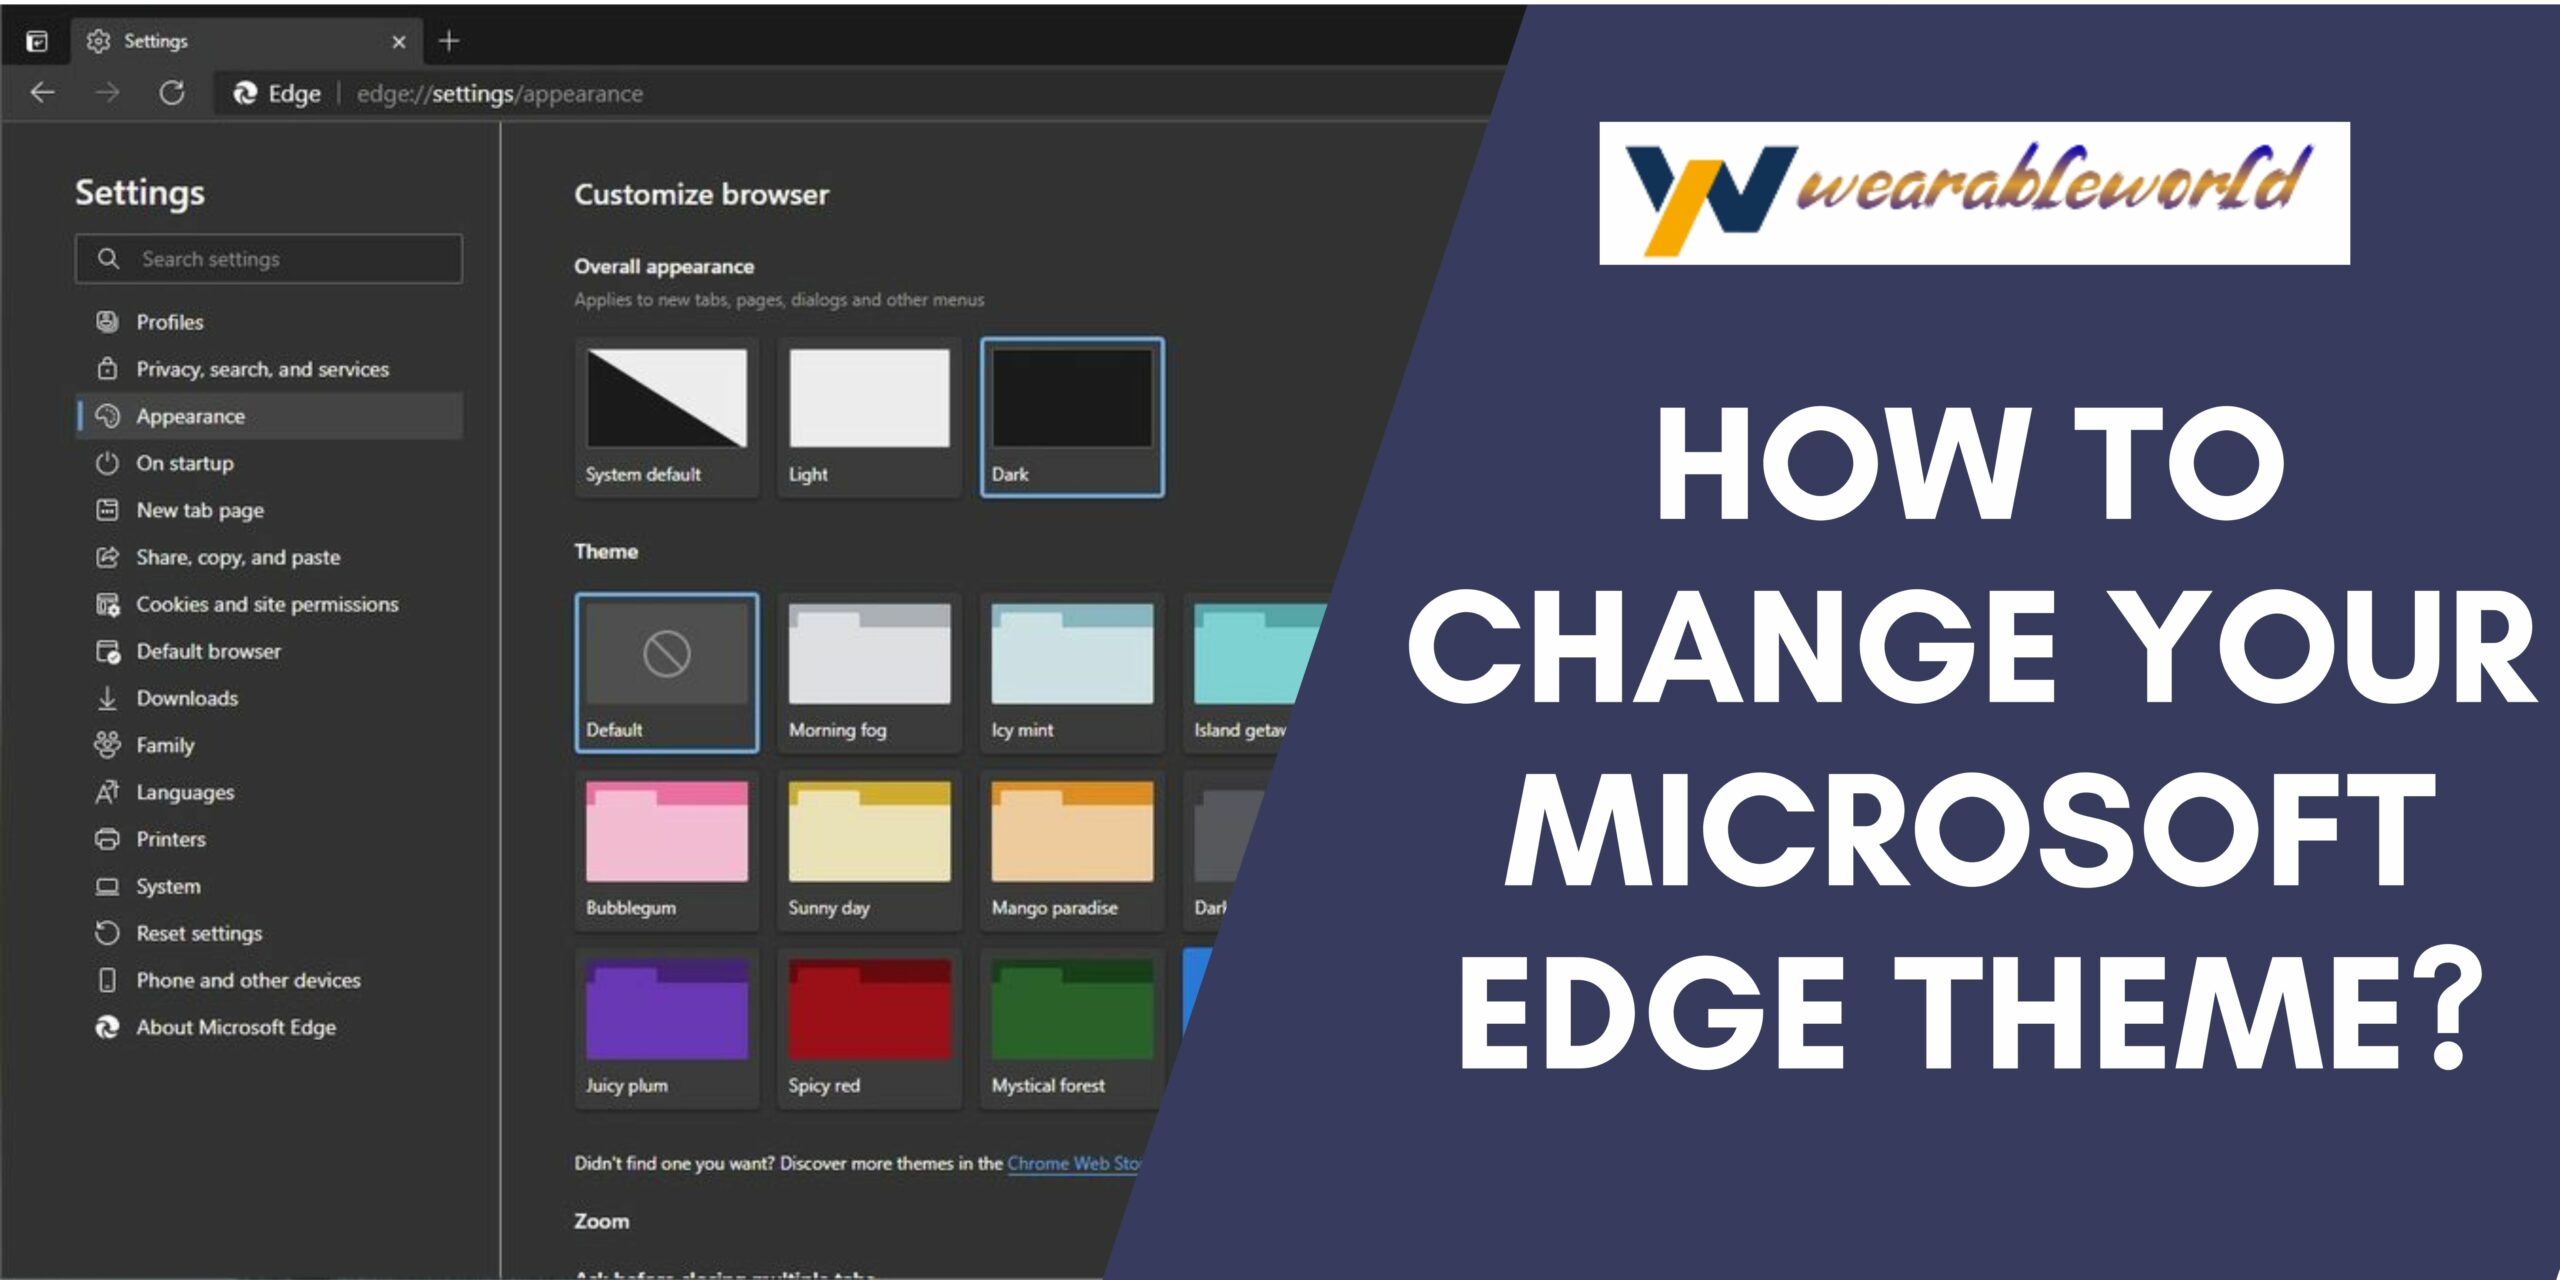 Change your Microsoft Edge theme